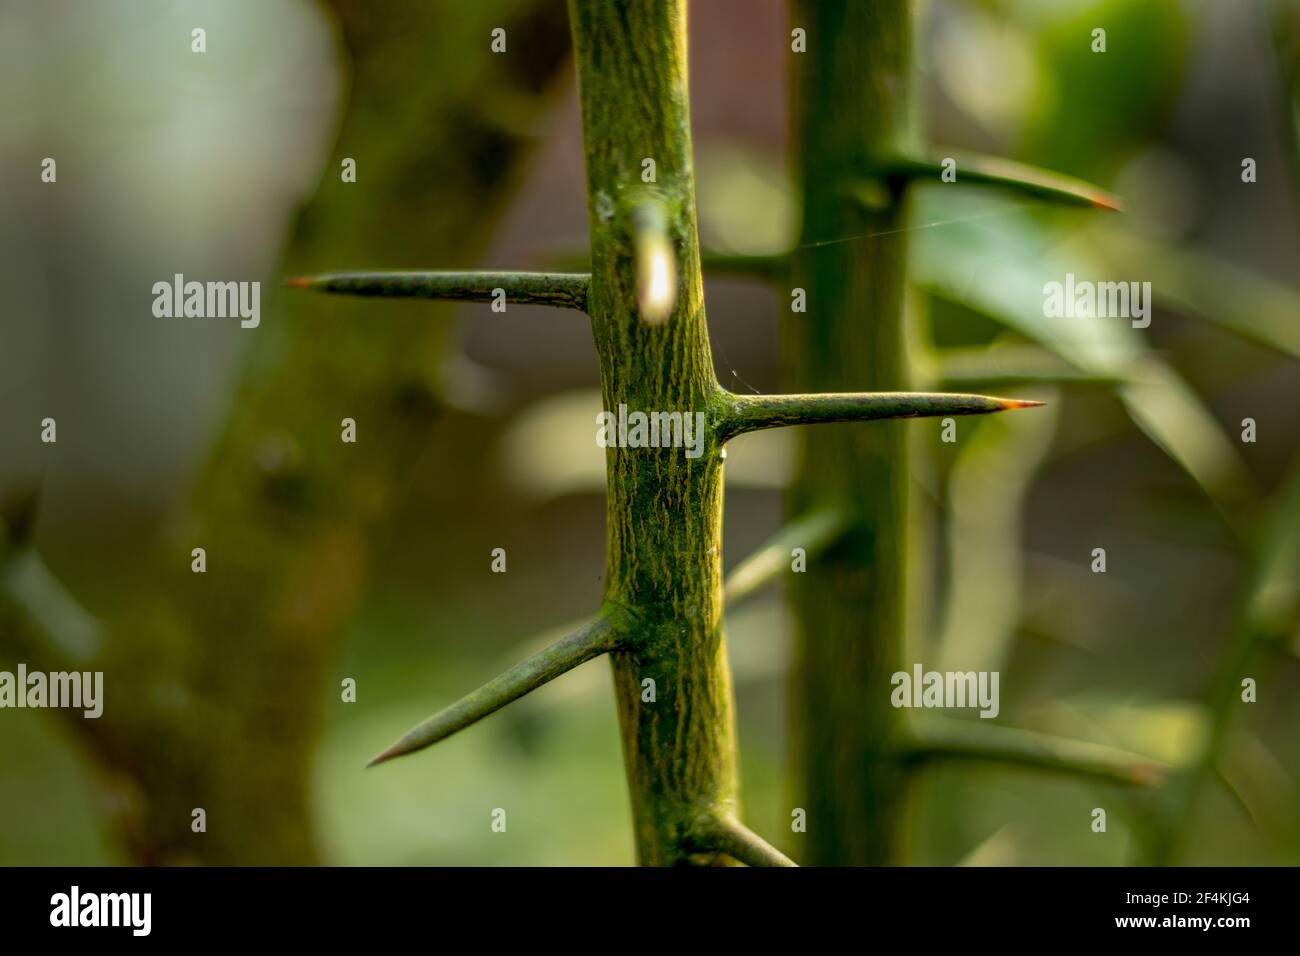 Palo con espinas fotografías e imágenes de alta resolución - Alamy